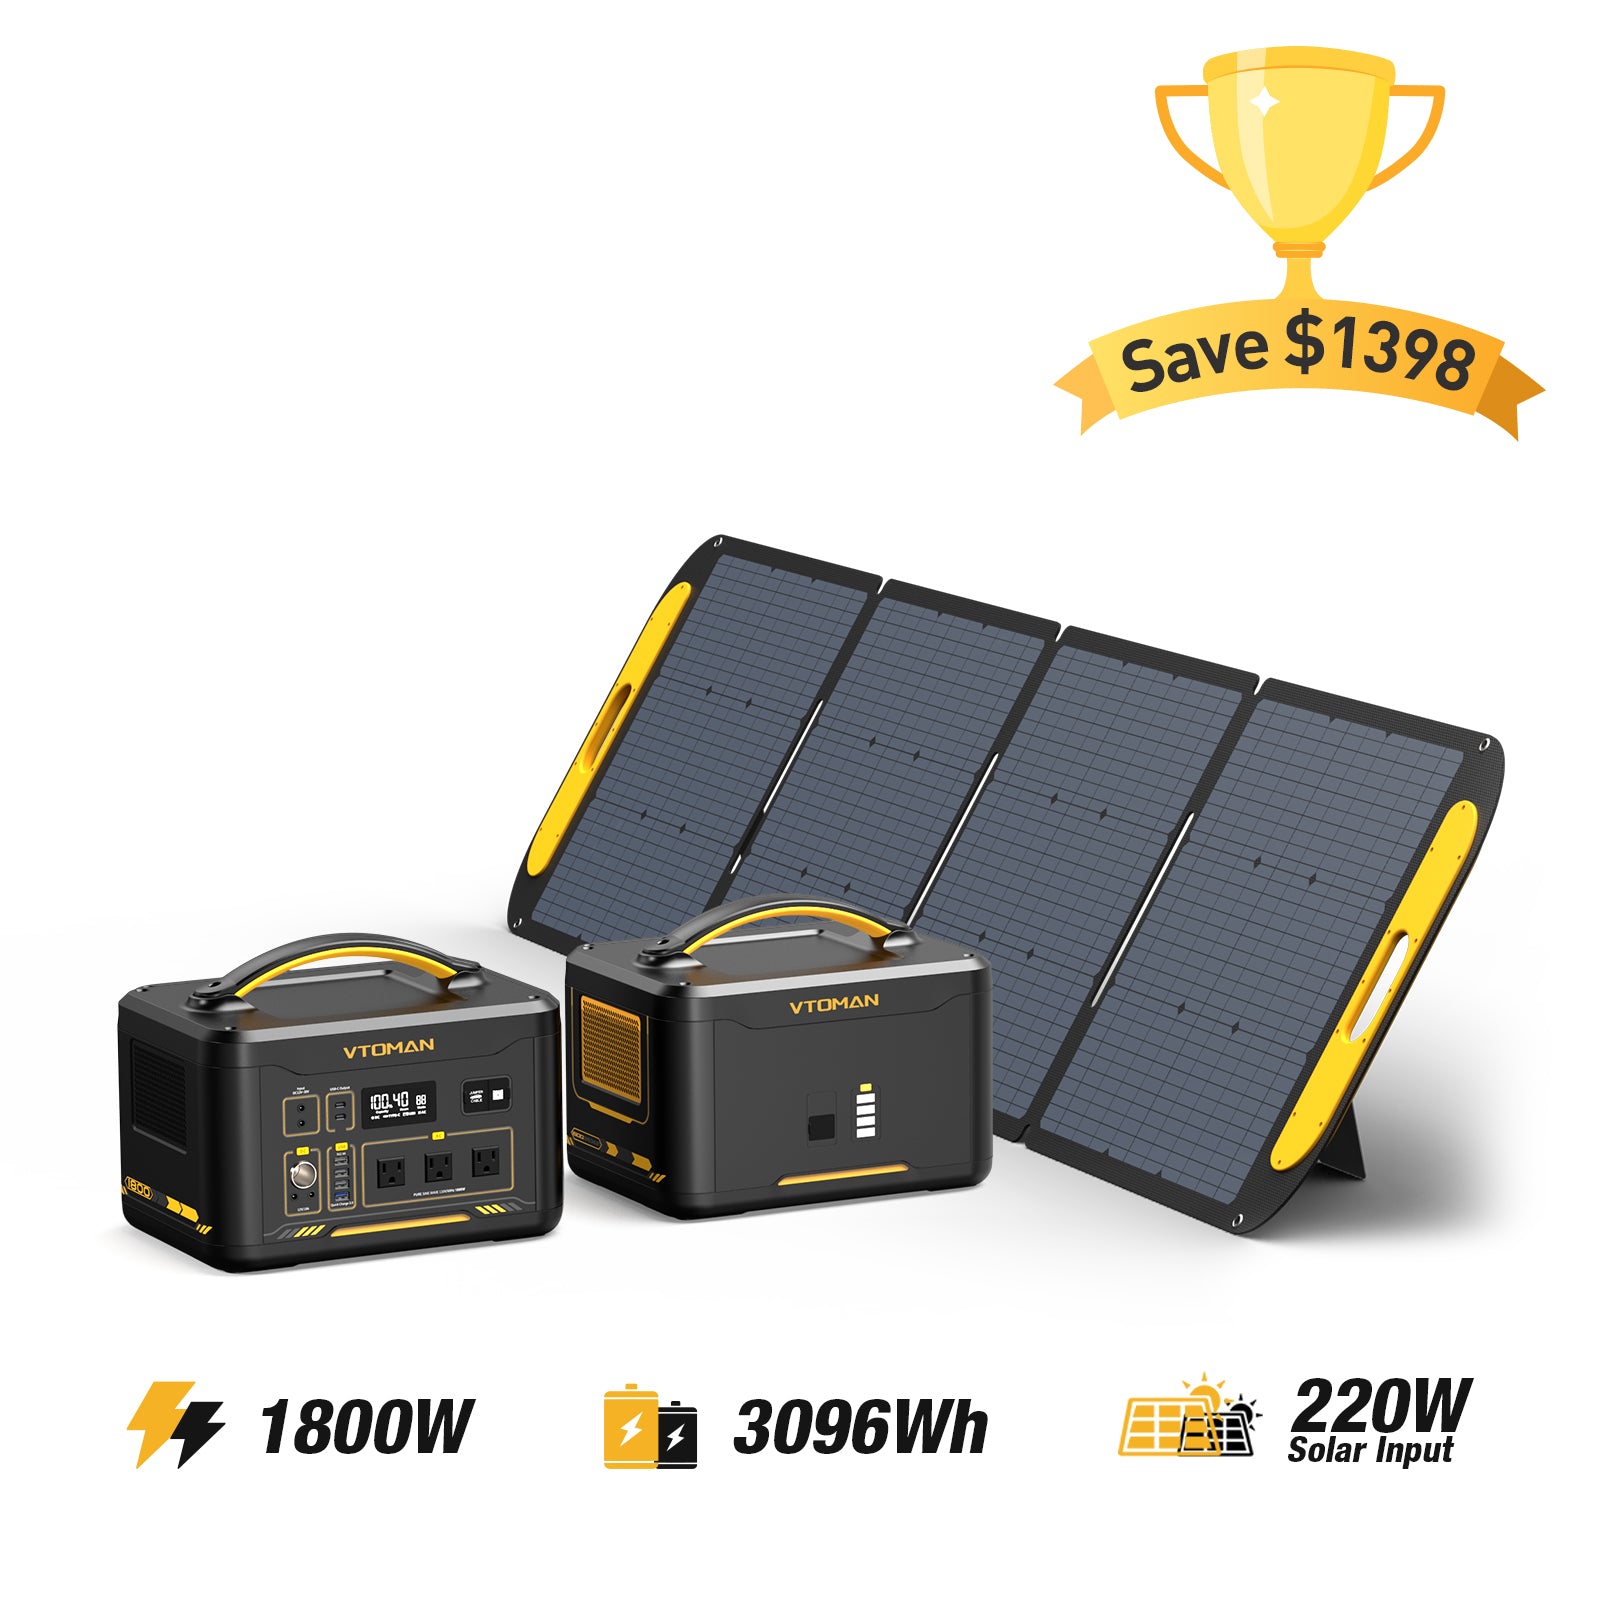 Jump 1800W/3096Wh 220W Solar Generator